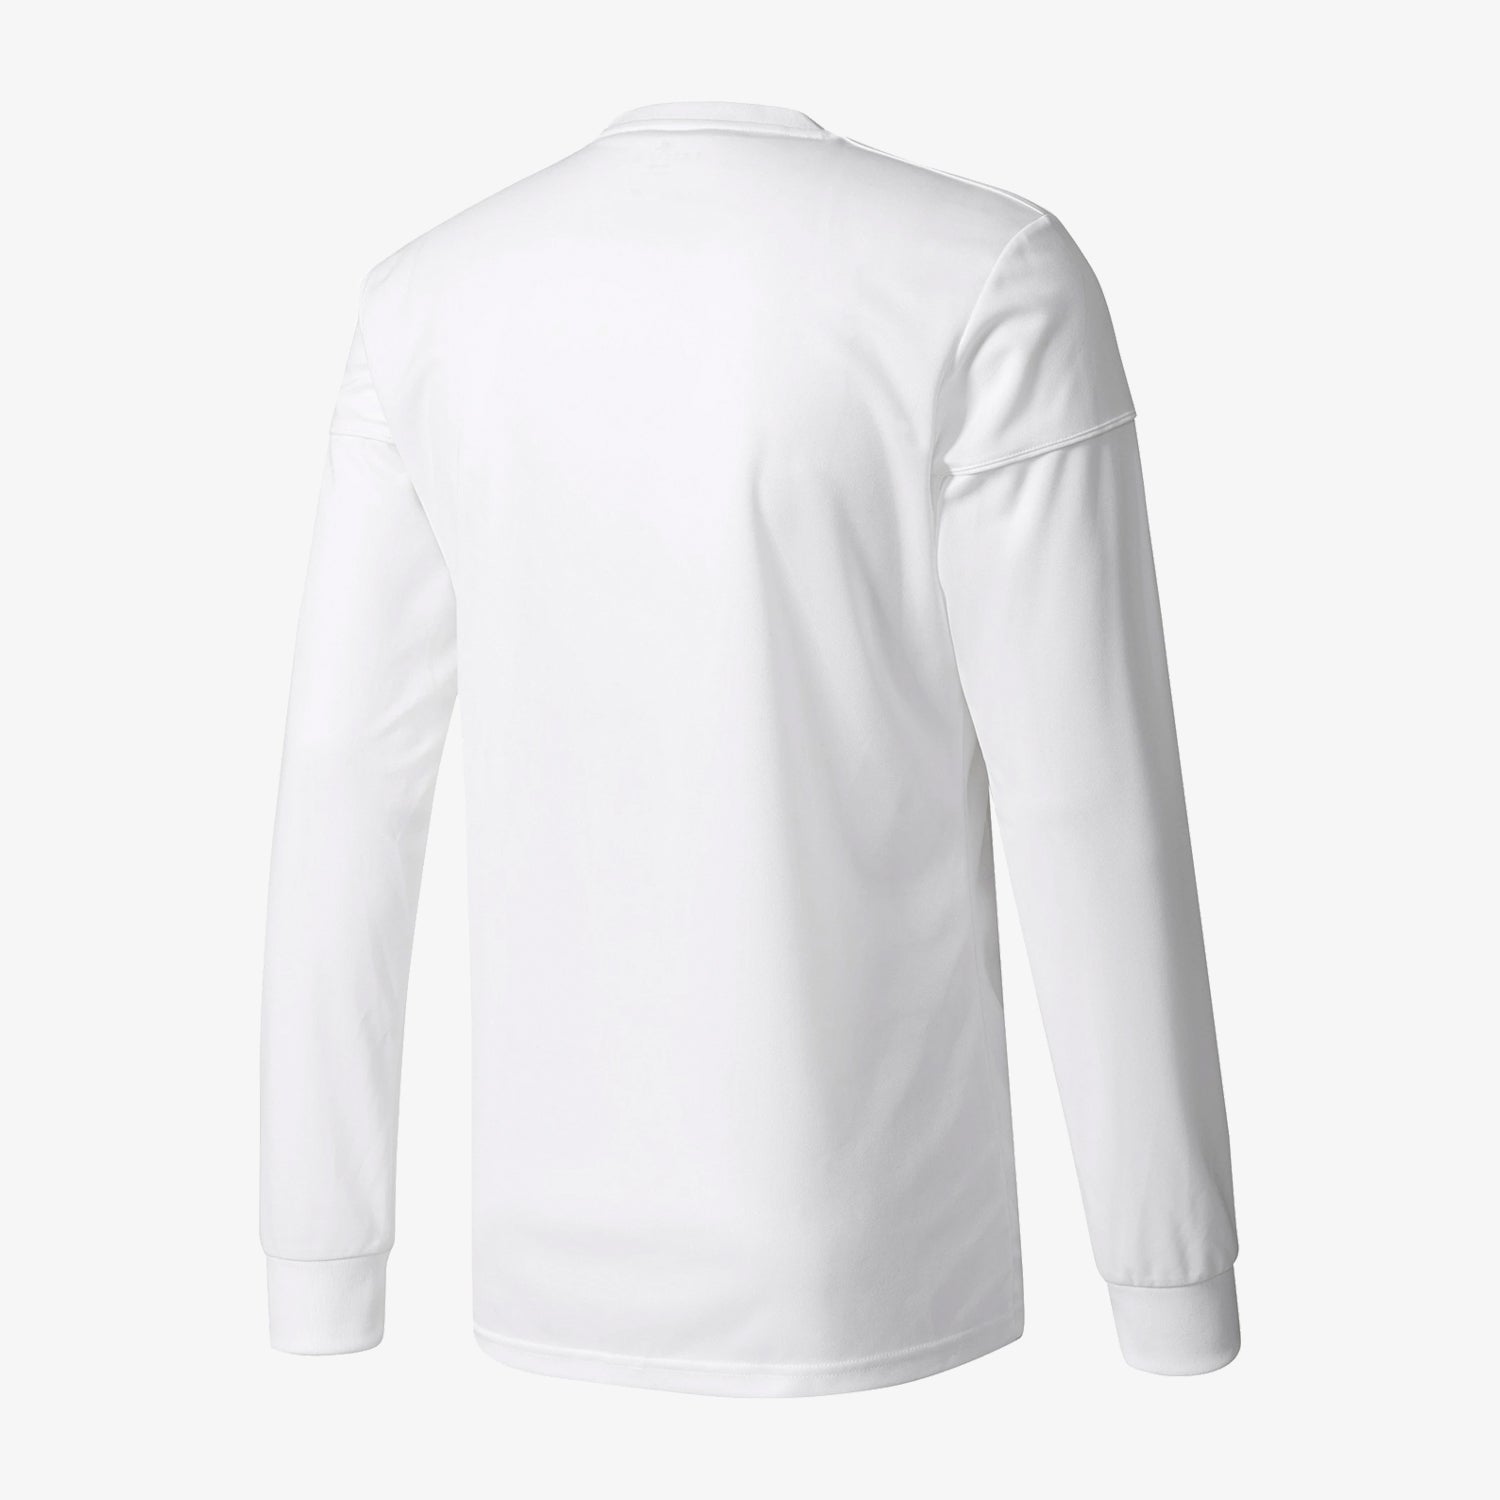 adidas Men's Germany 17/18 Home Long Sleeve Jersey White/Black – Azteca  Soccer